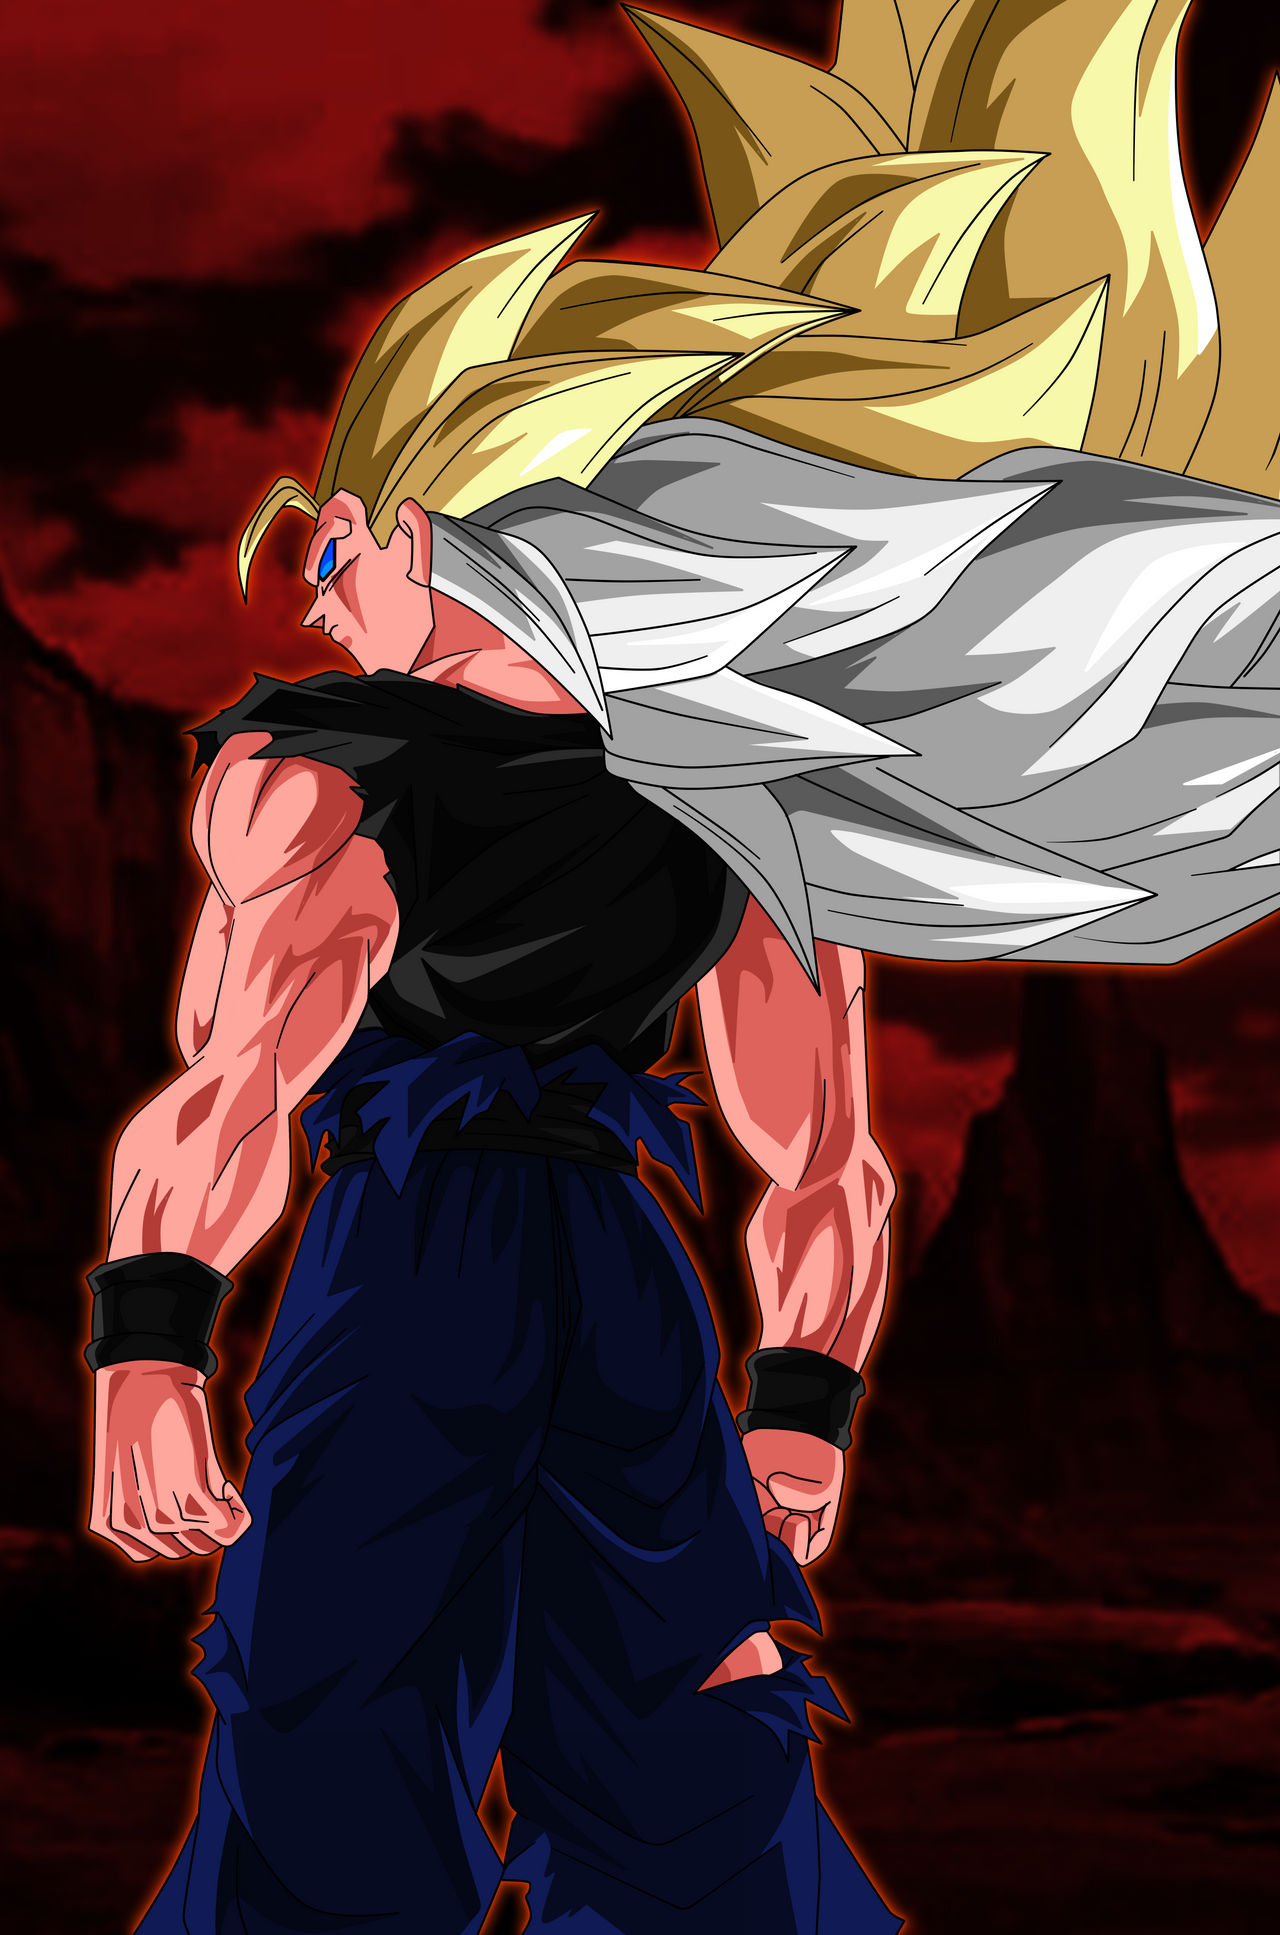 Goku Super Saiyan 8 by ChronoFz on DeviantArt